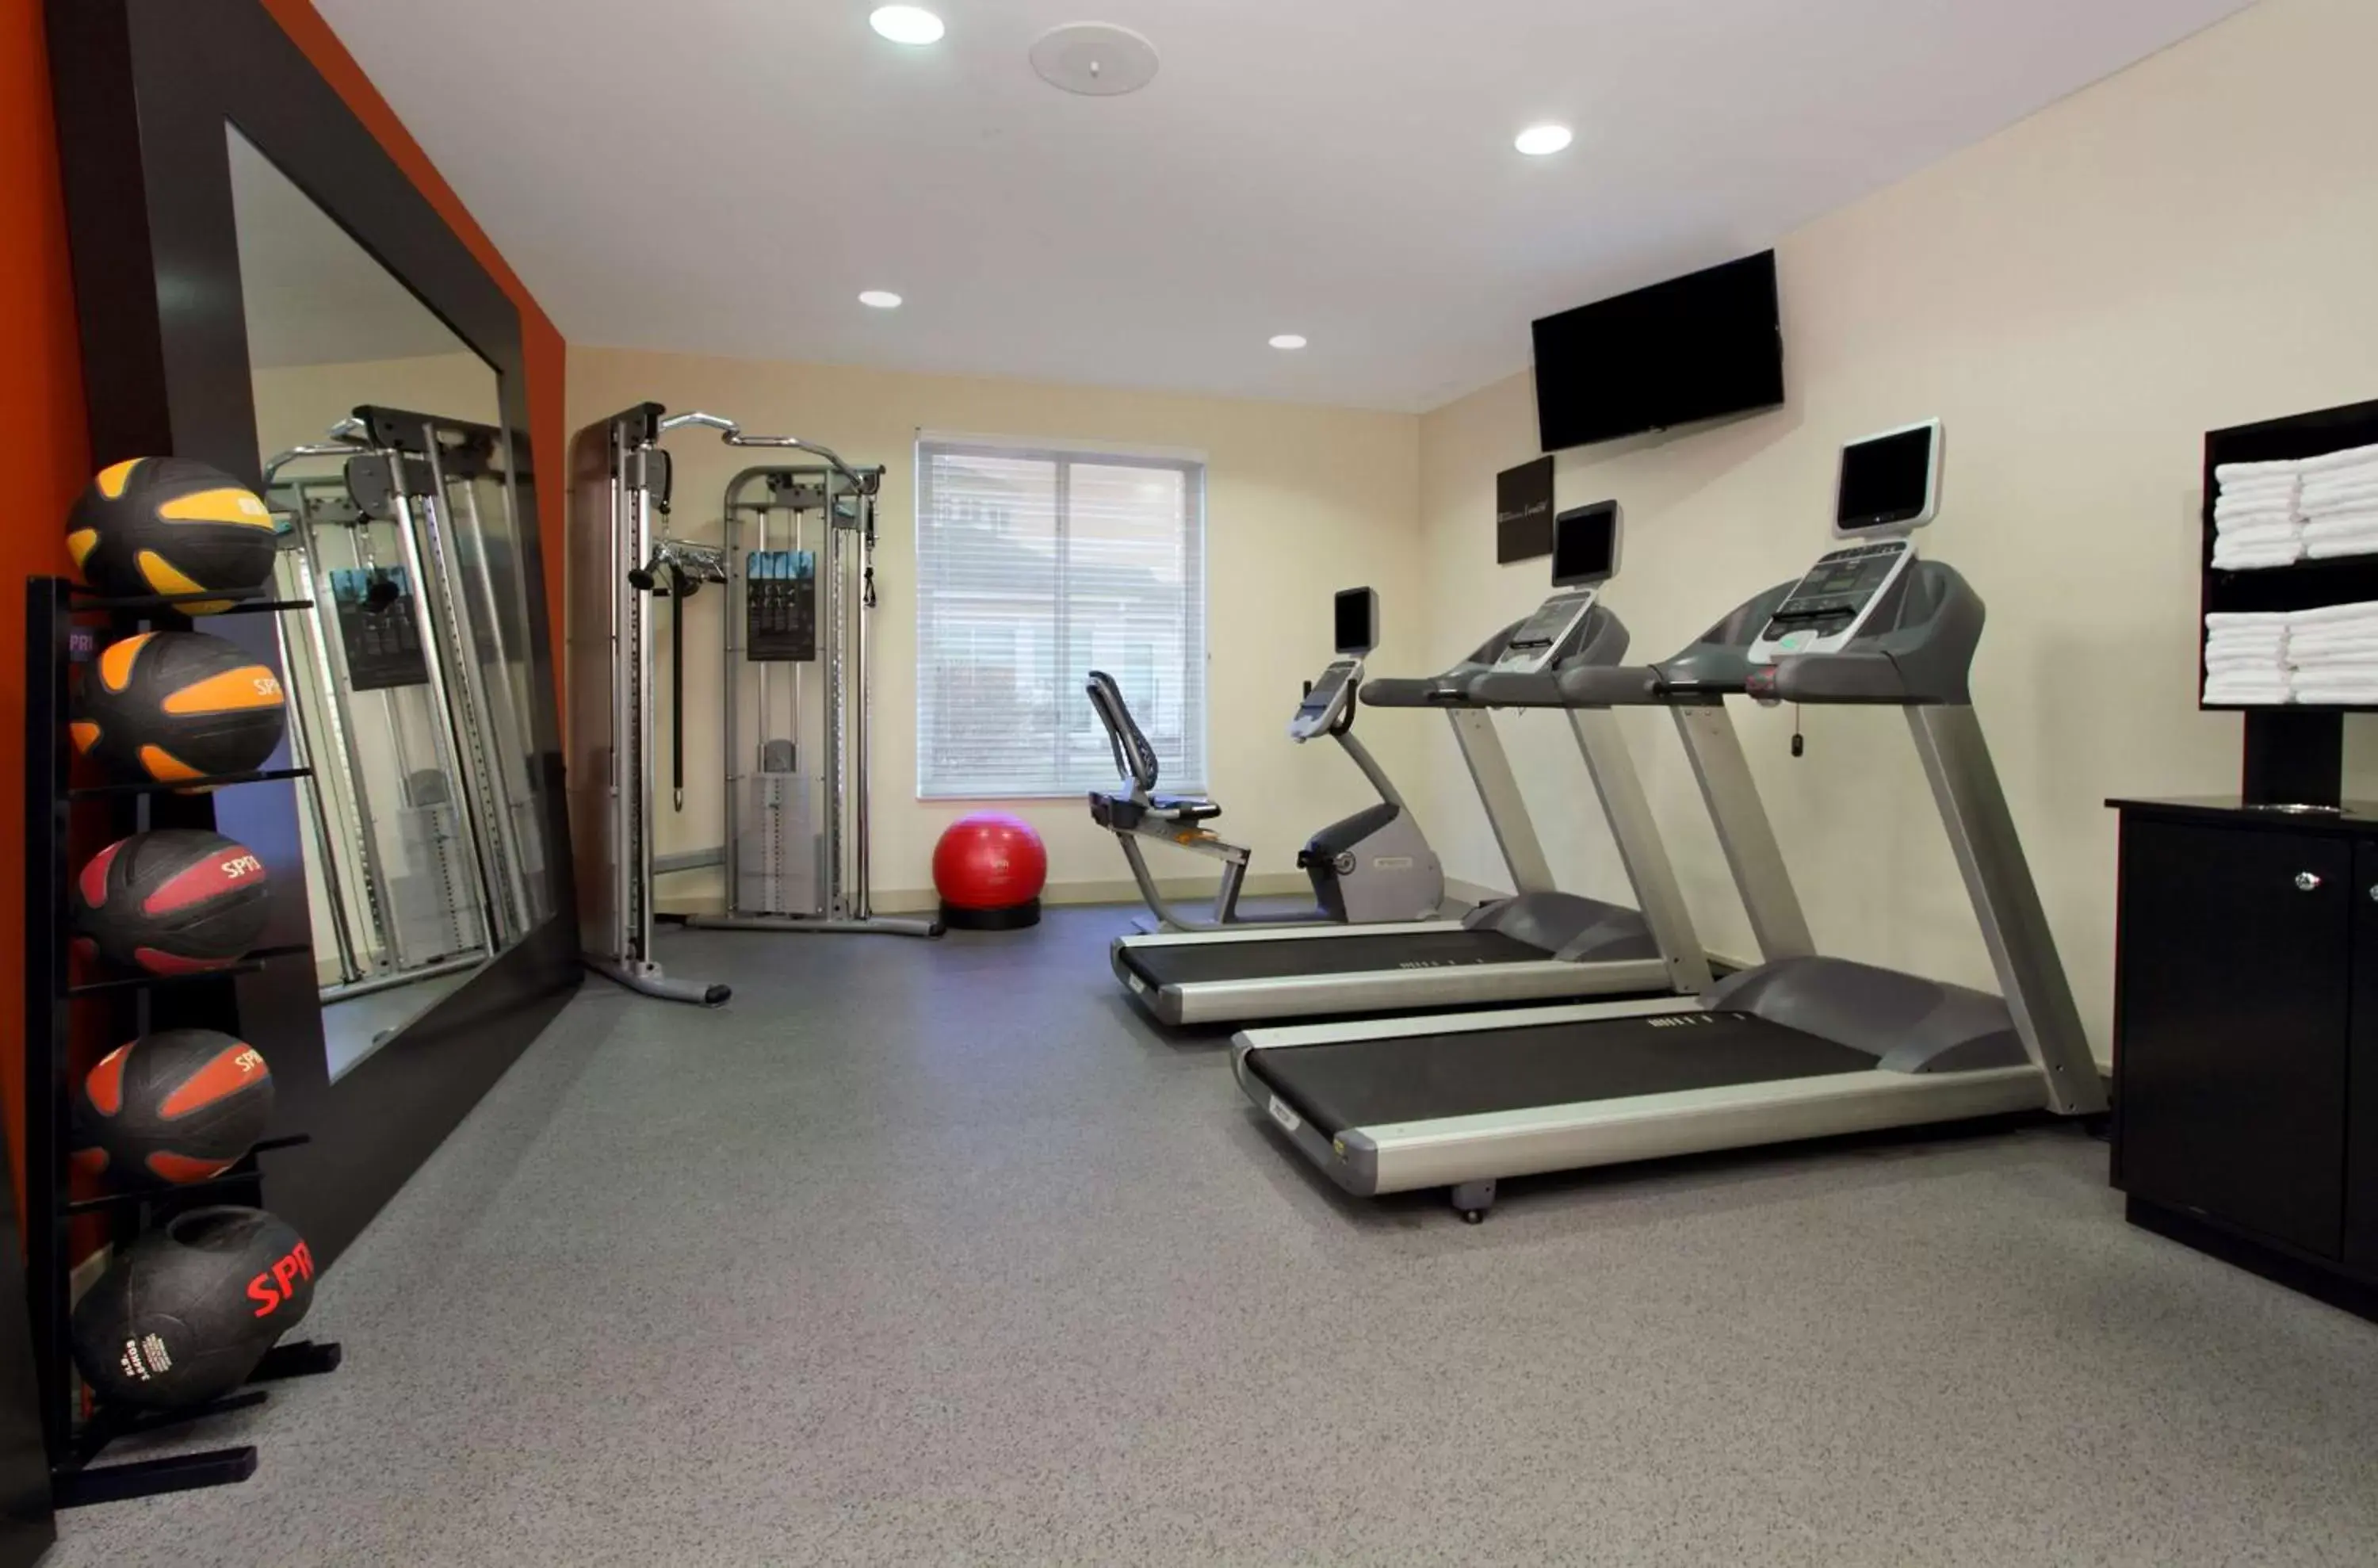 Fitness centre/facilities, Fitness Center/Facilities in Hilton Garden Inn Columbus Airport